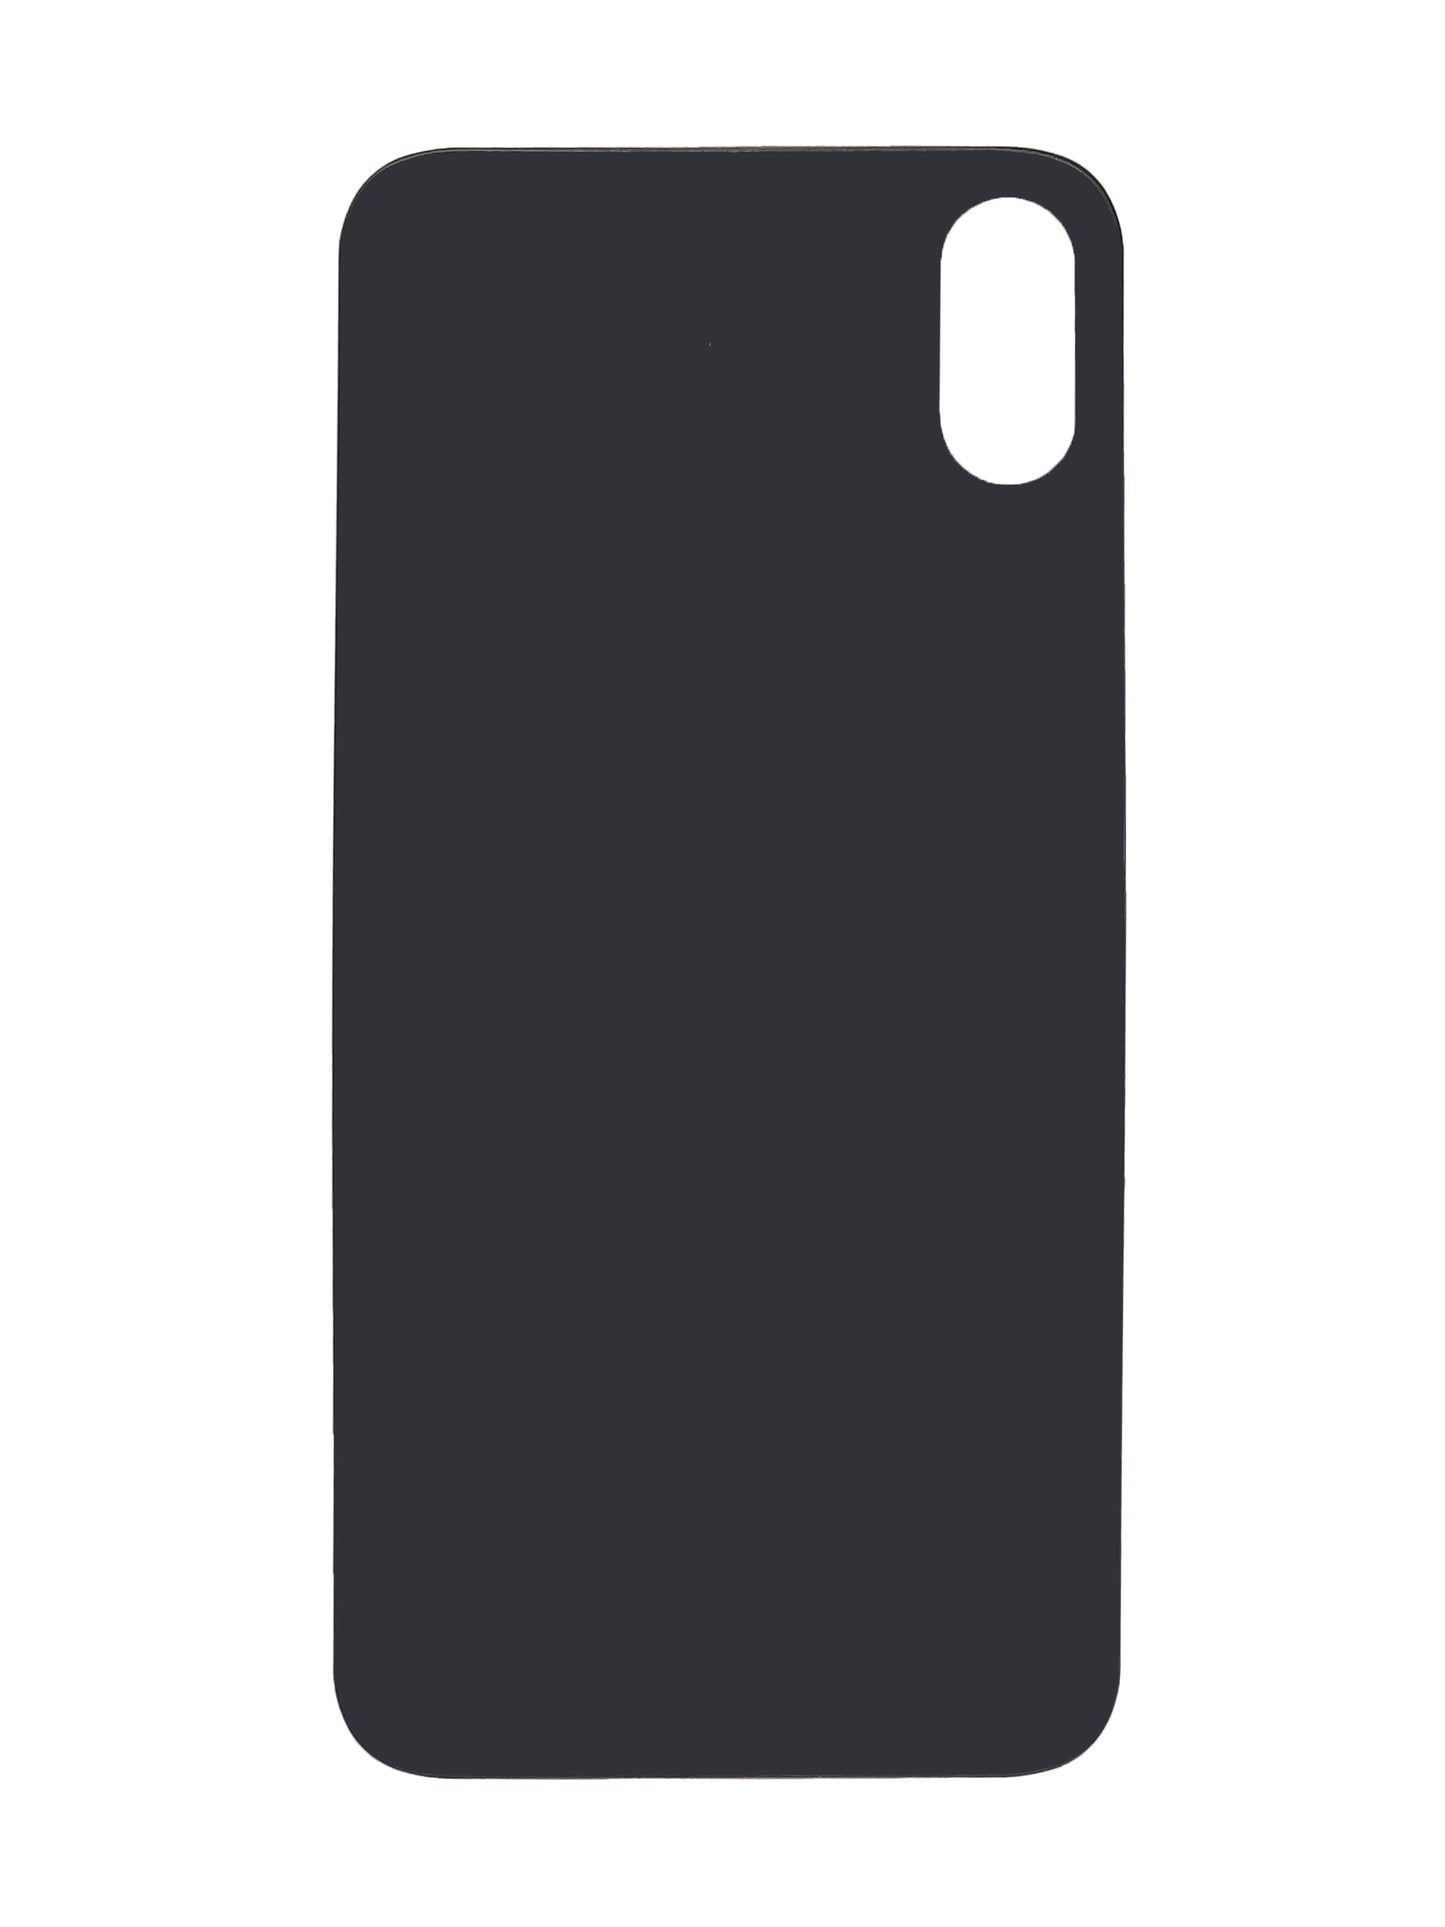 iPhone XS Back Glass (No Logo) (Black)